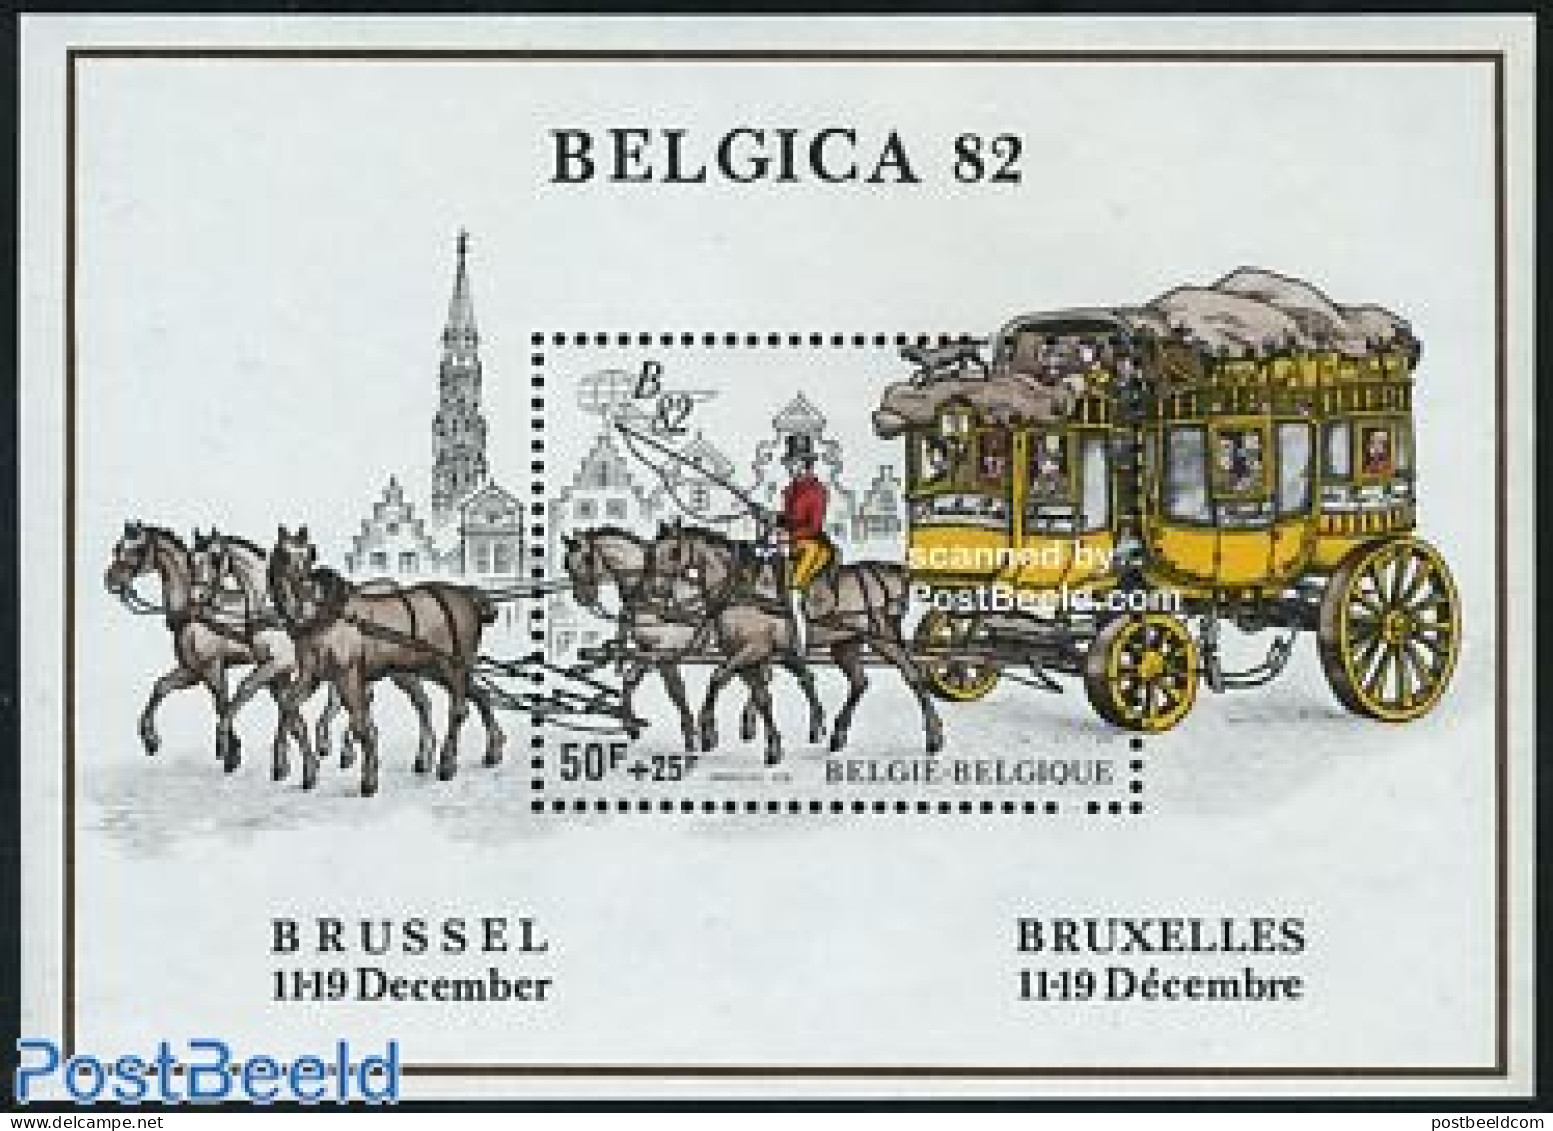 Belgium 1982 Belgica 82 S/s, Mint NH, Nature - Transport - Dogs - Horses - Post - Coaches - Nuevos